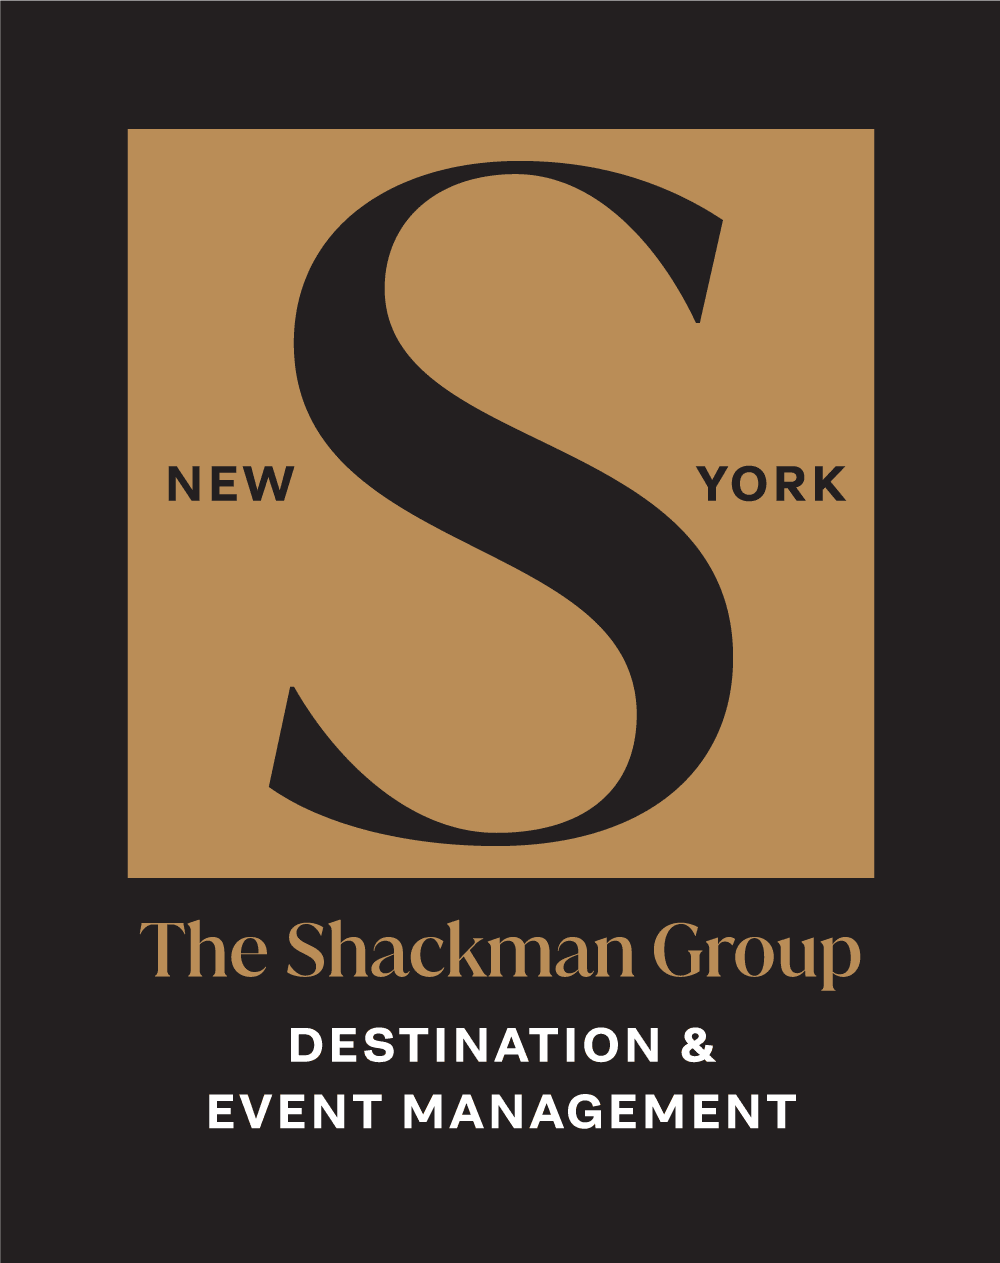 Die Shackman Group DMC New York